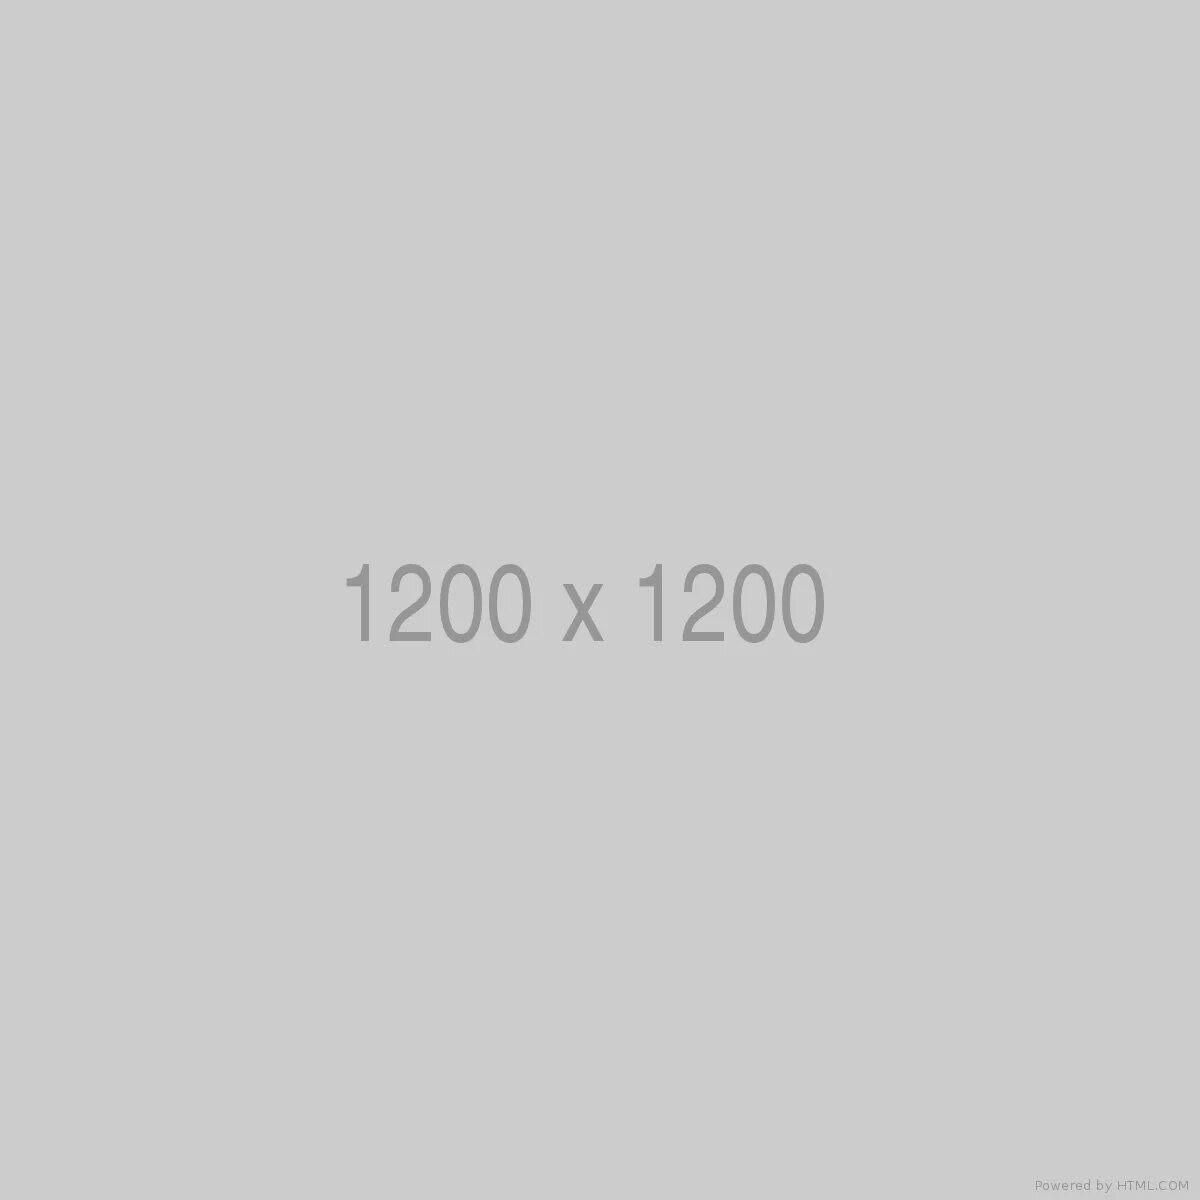 200 10 92. 200 На 200. 200 На 200 пикселей. Изображение 200x200. 200x200 картинки.